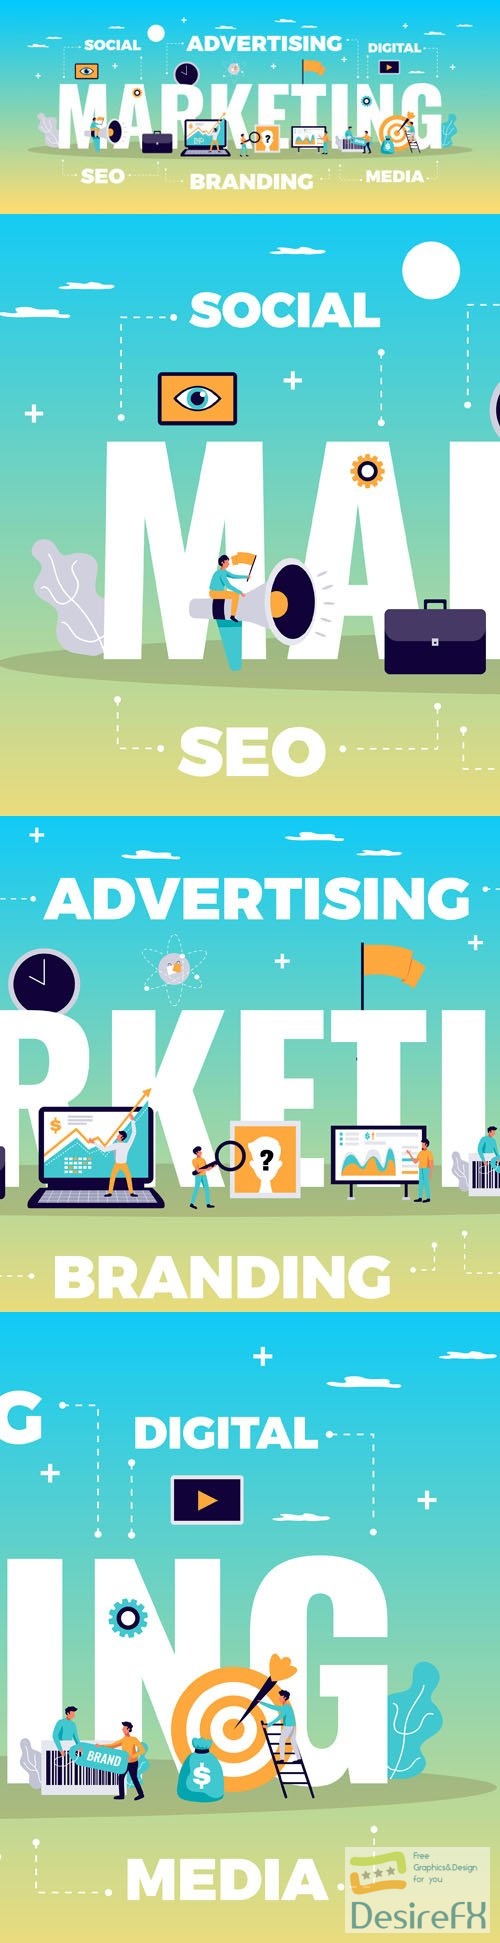 Digital Marketing Concept With Online Advertising Media Symbols Flat